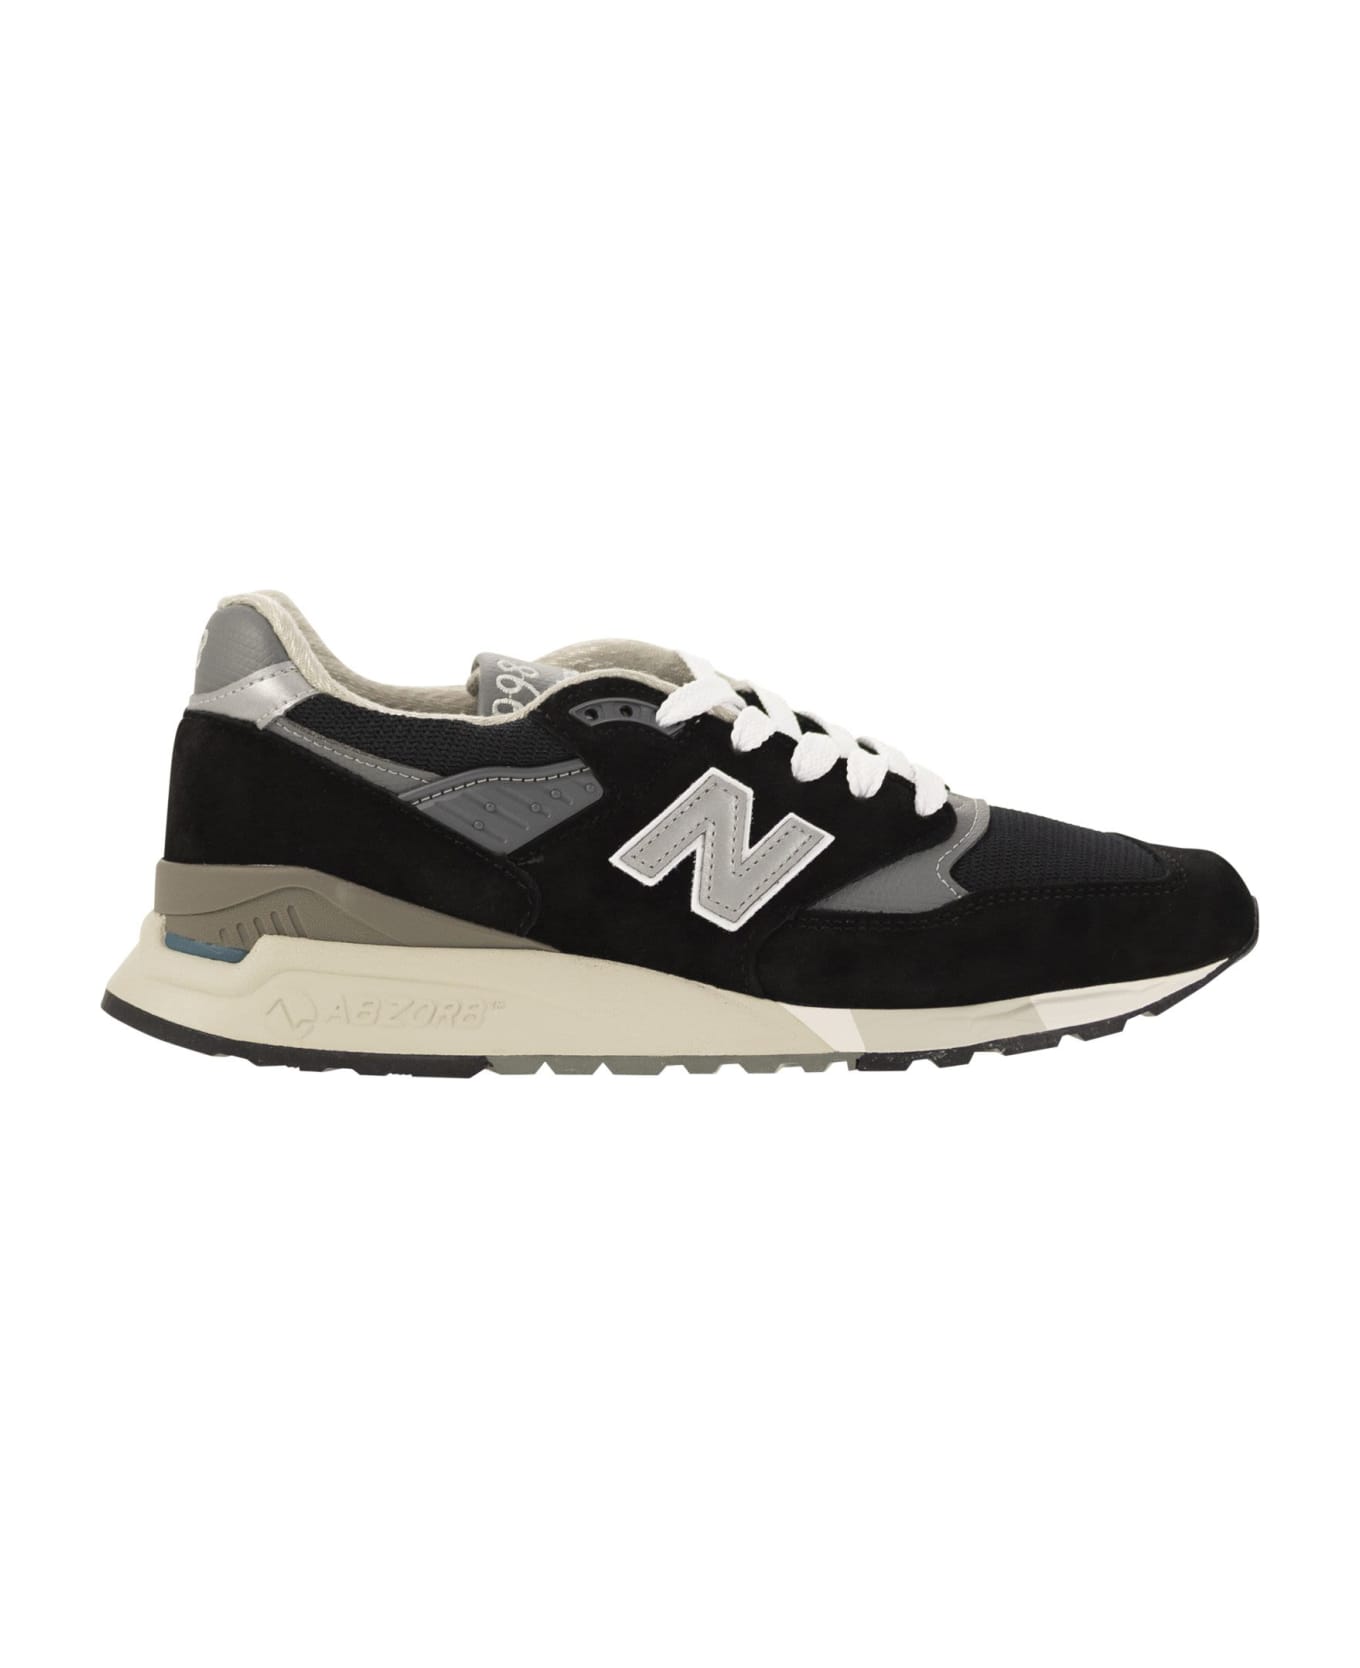 New Balance 998 - Sneakers - Black